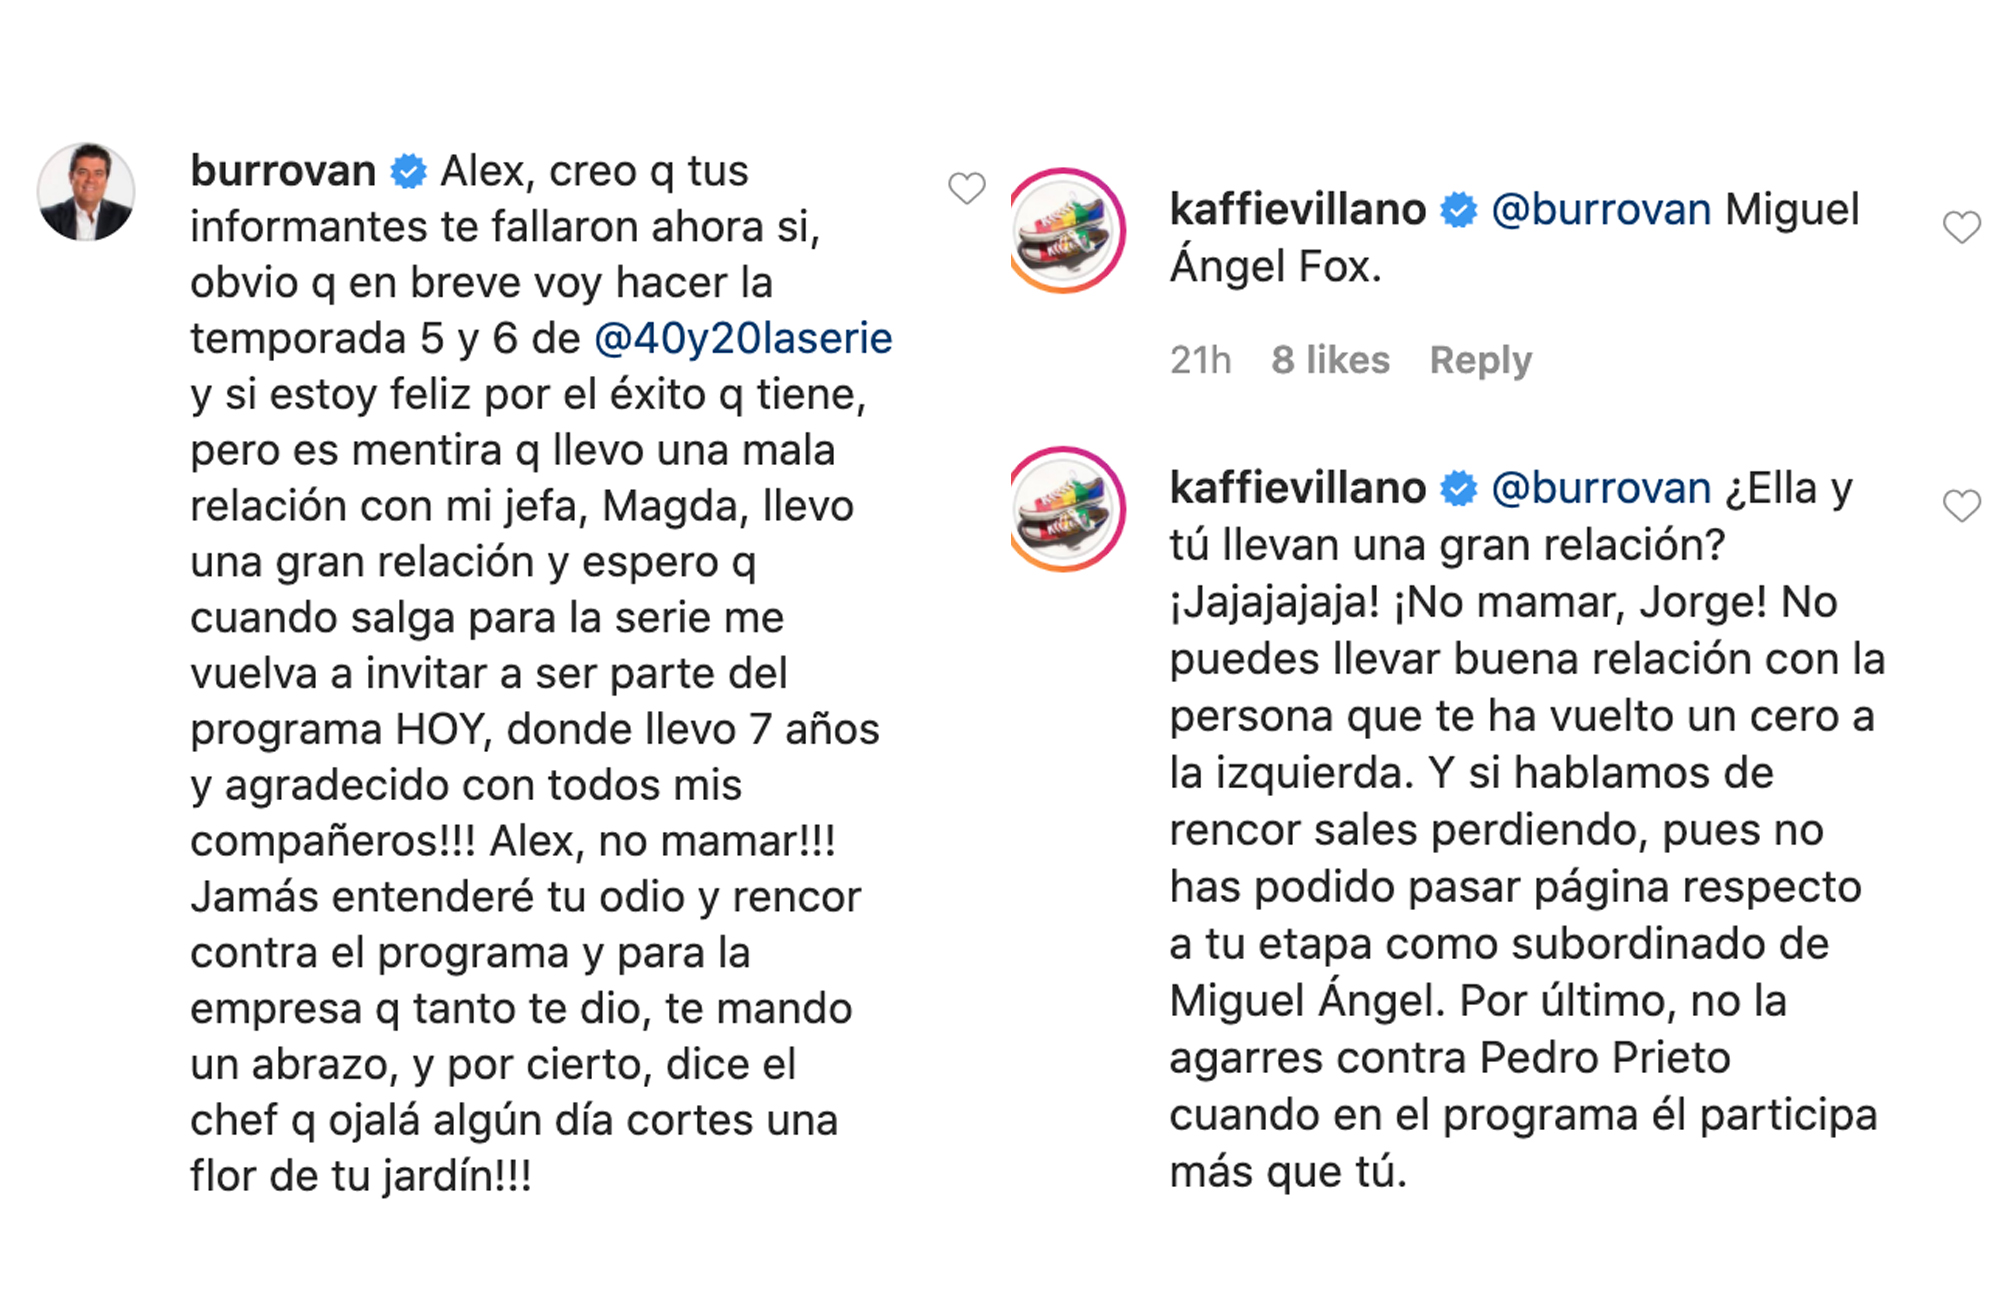 Mensajes de "El Burro" Van Rankin y Alex Kaffie en Instagram.